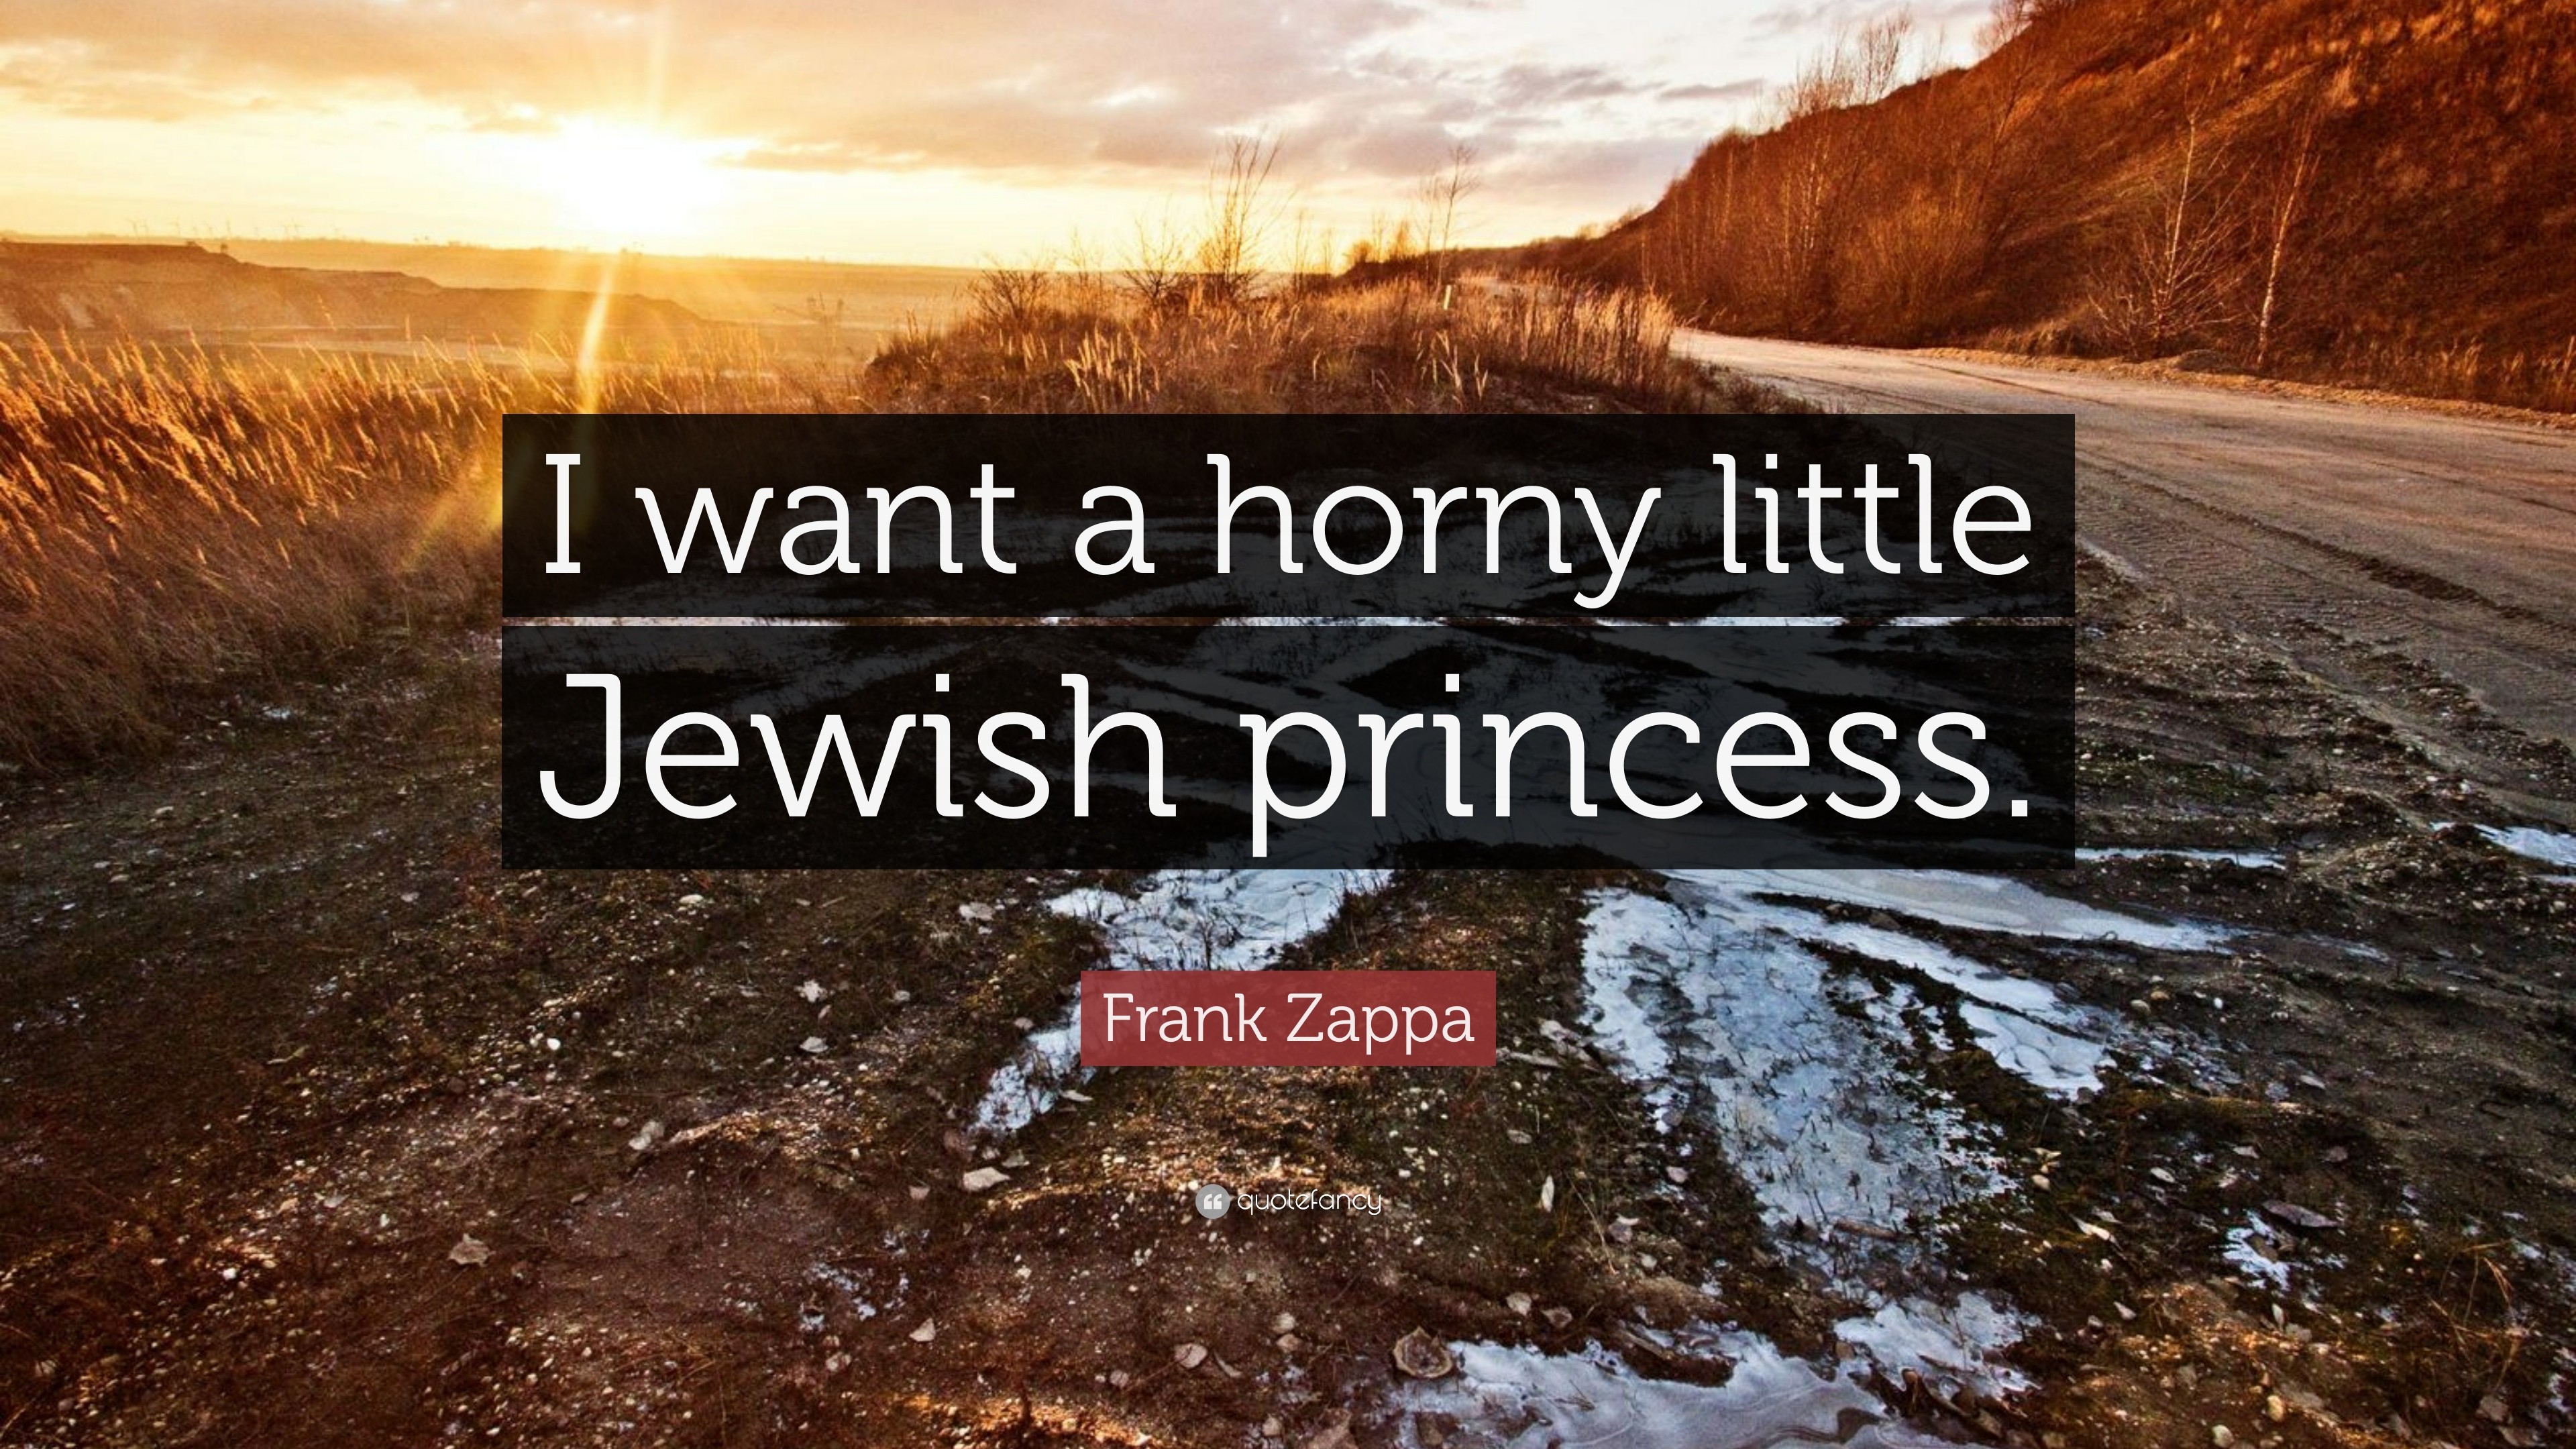 3840x2160 Frank Zappa Quote: “I want a horny little Jewish princess.”